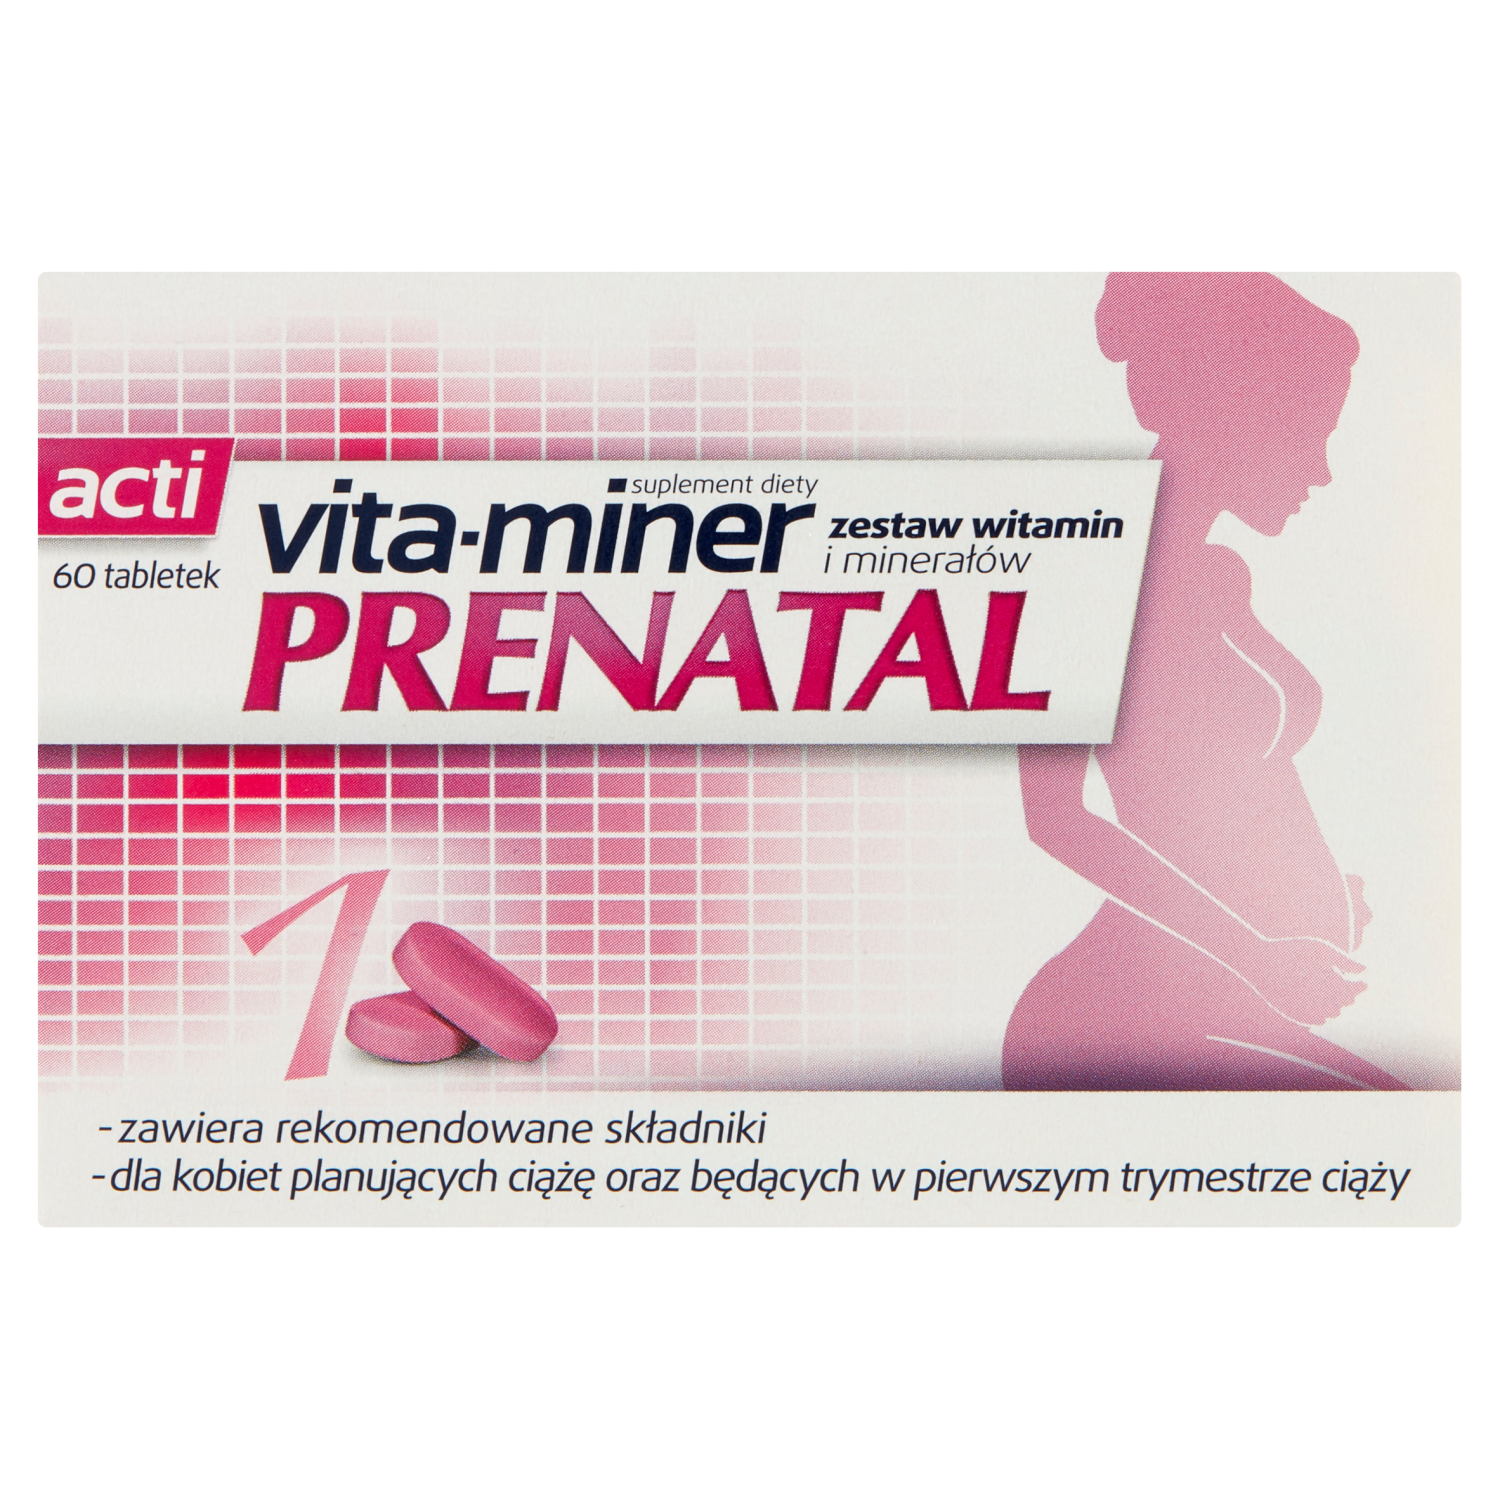 nutrihealth burak czerwony биологически активная добавка 60 таблеток 1 упаковка Vita-Miner Prenatal биологически активная добавка, 60 таблеток/1 упаковка